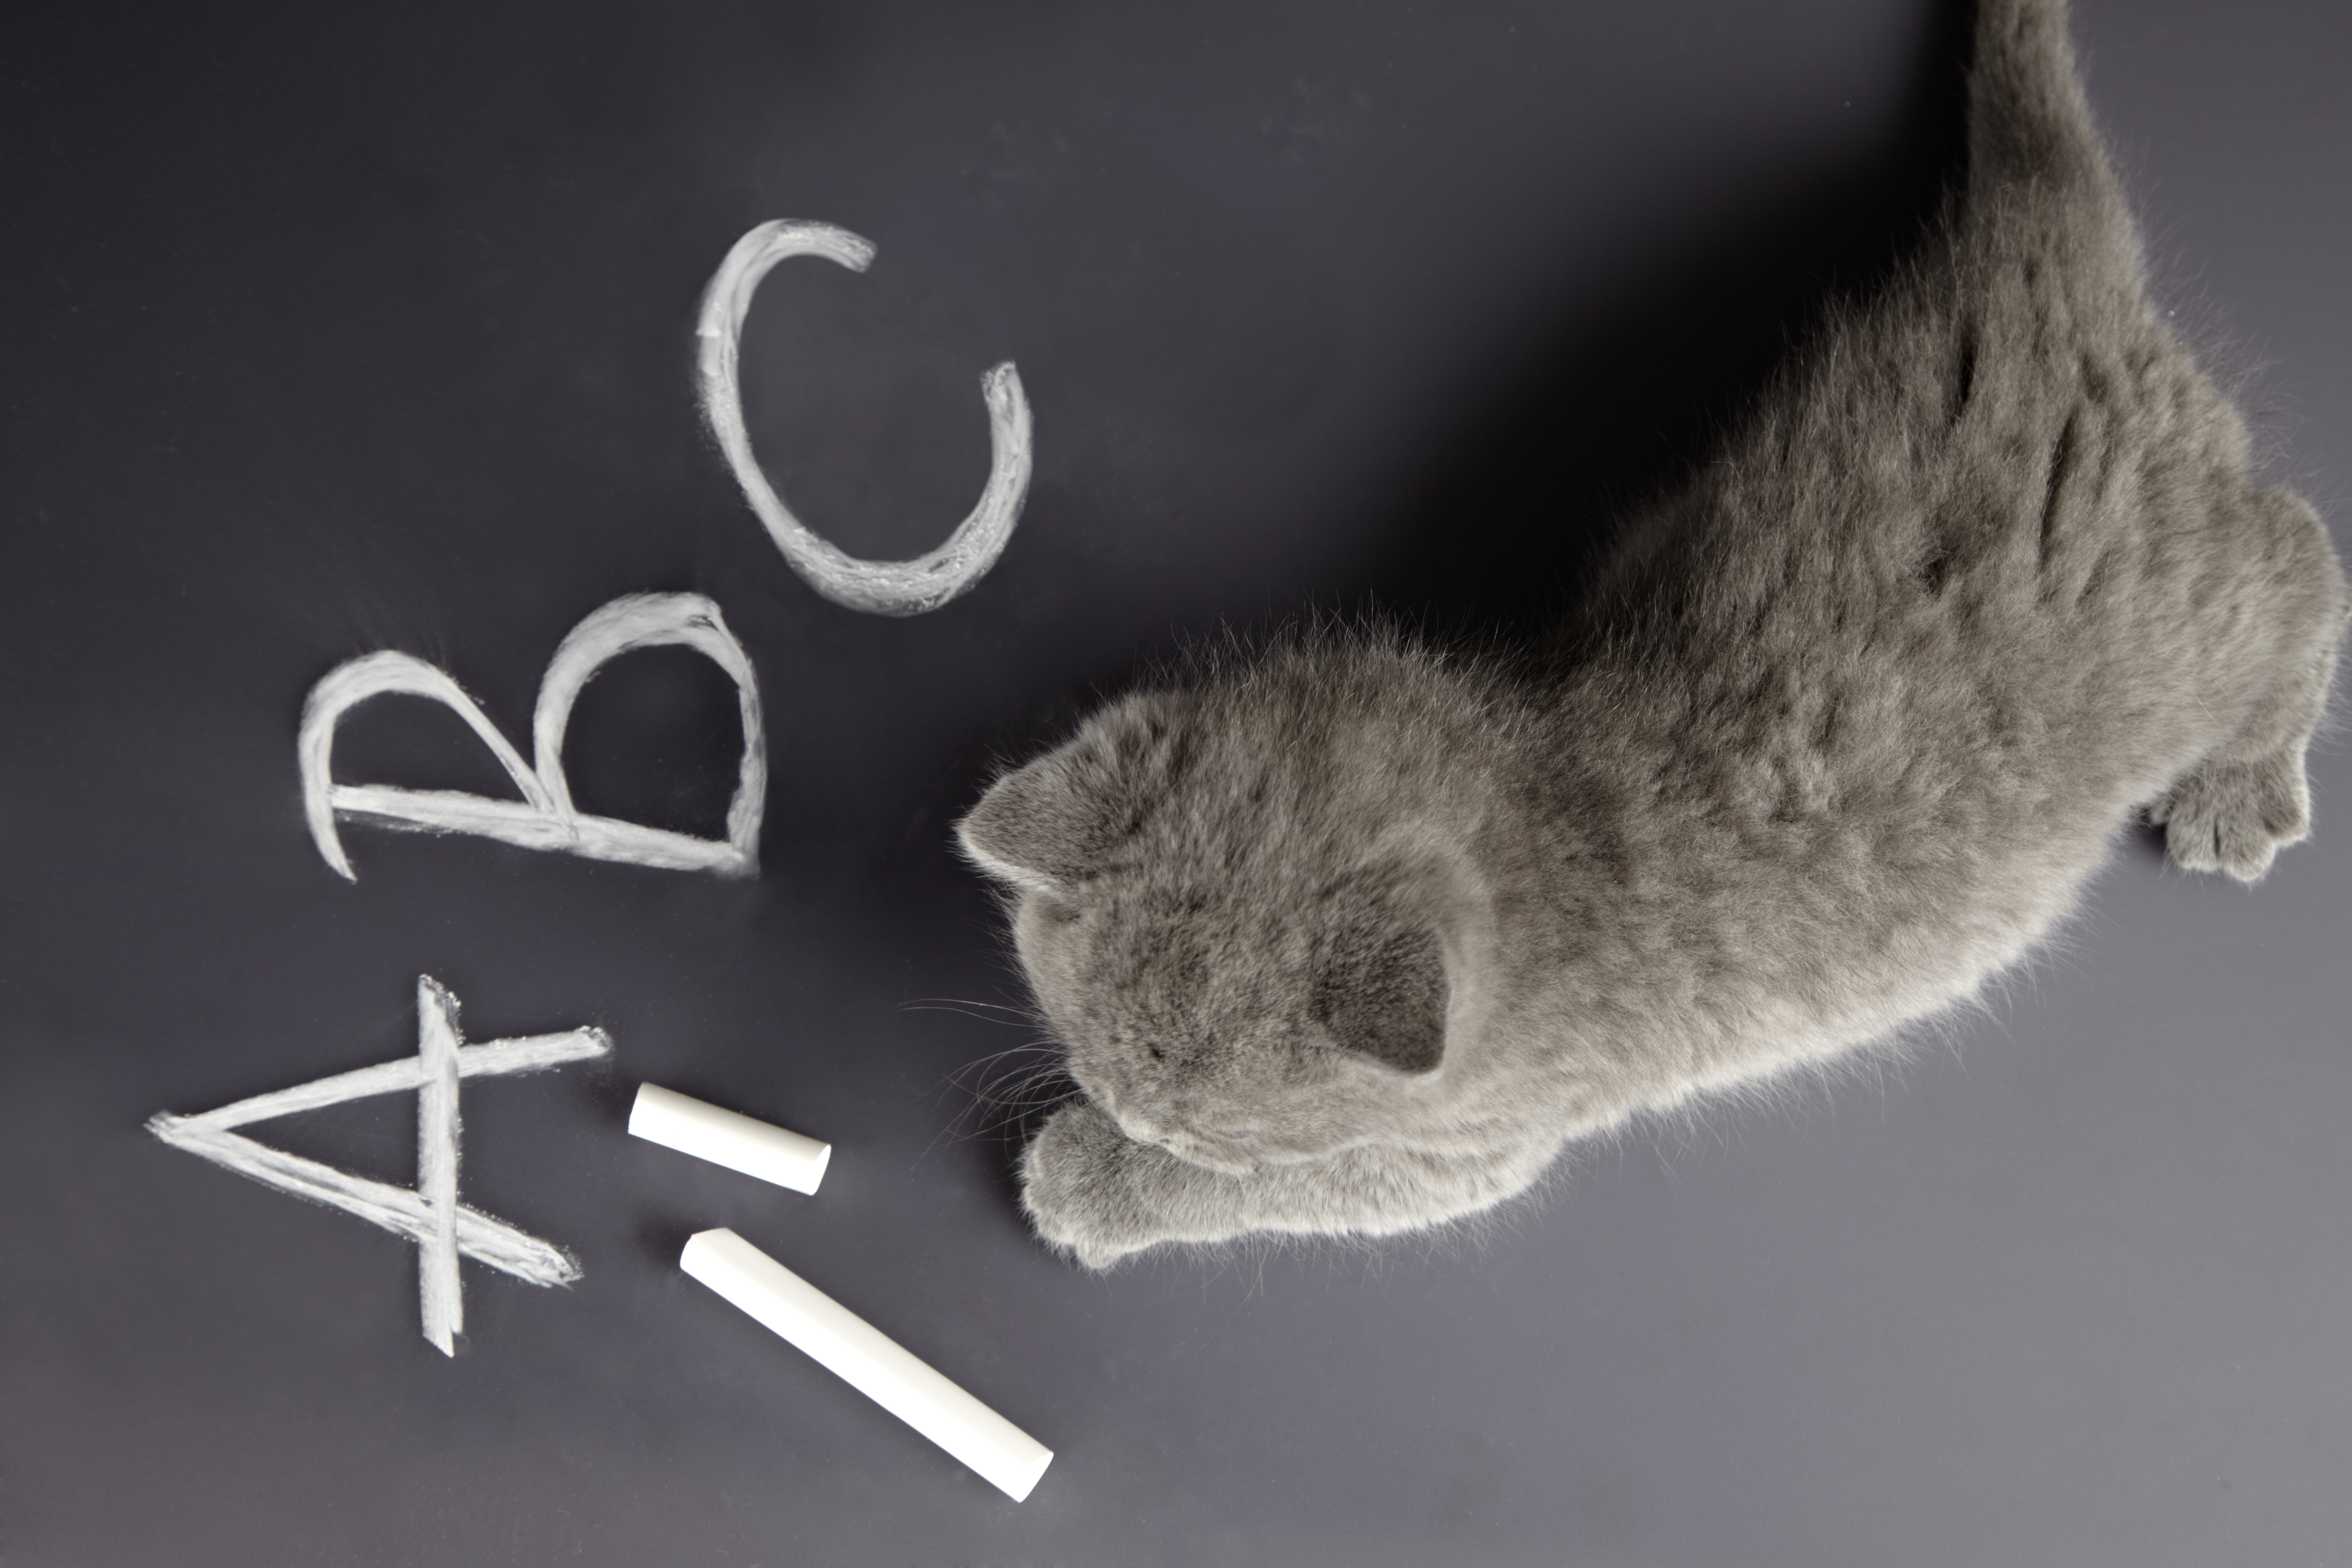 grey kitten on chalkboard with letters "ABC"